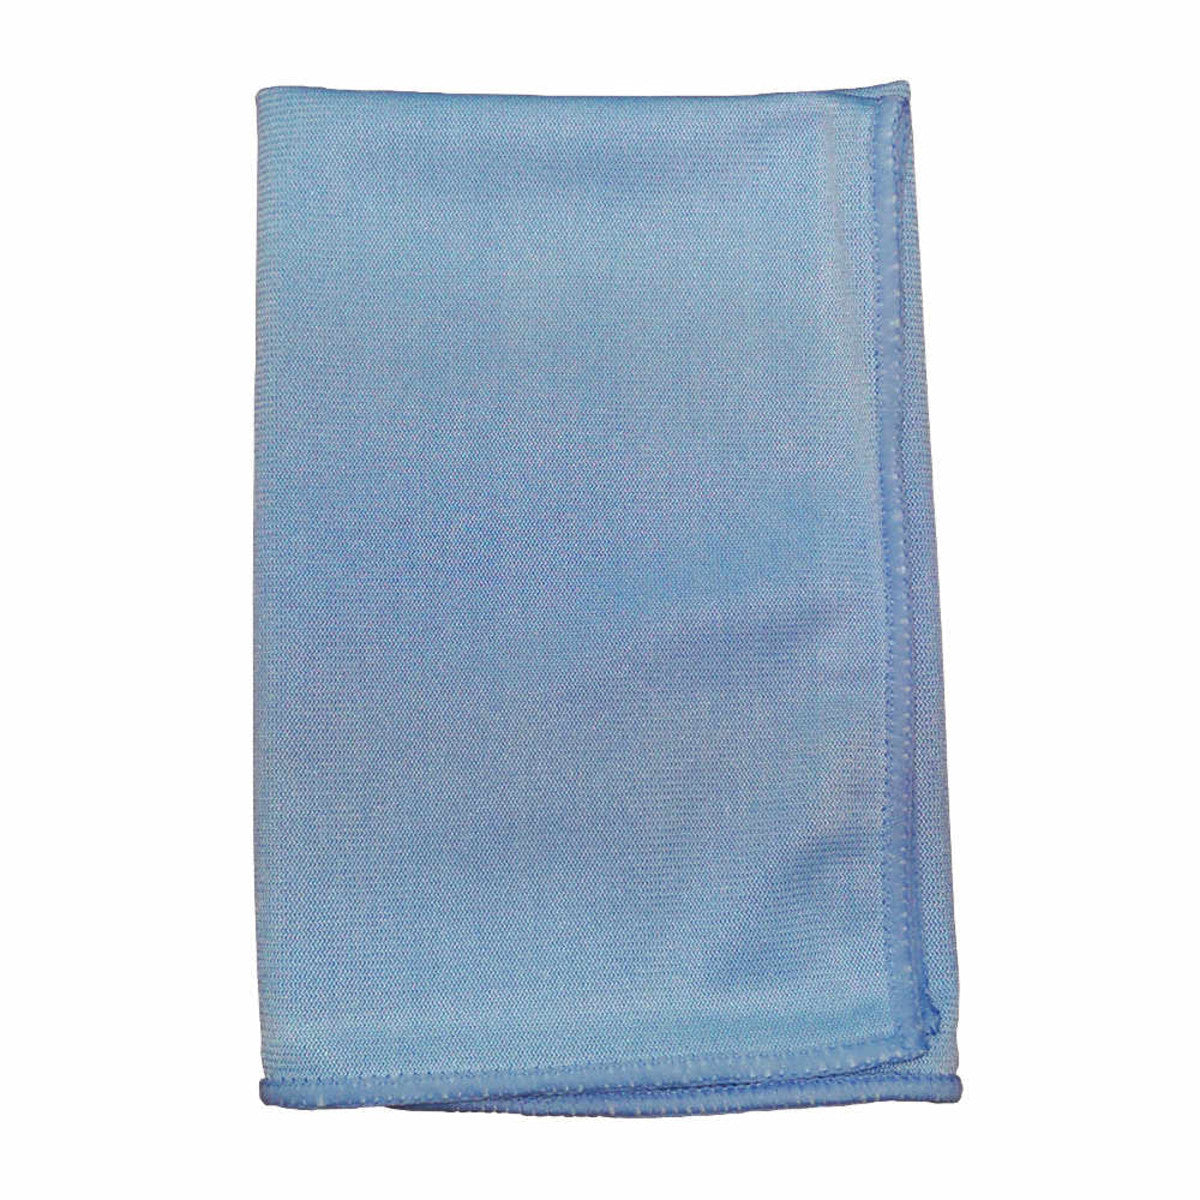 16 x 16 Inch Blue Microfiber Smooth Glass Cloth